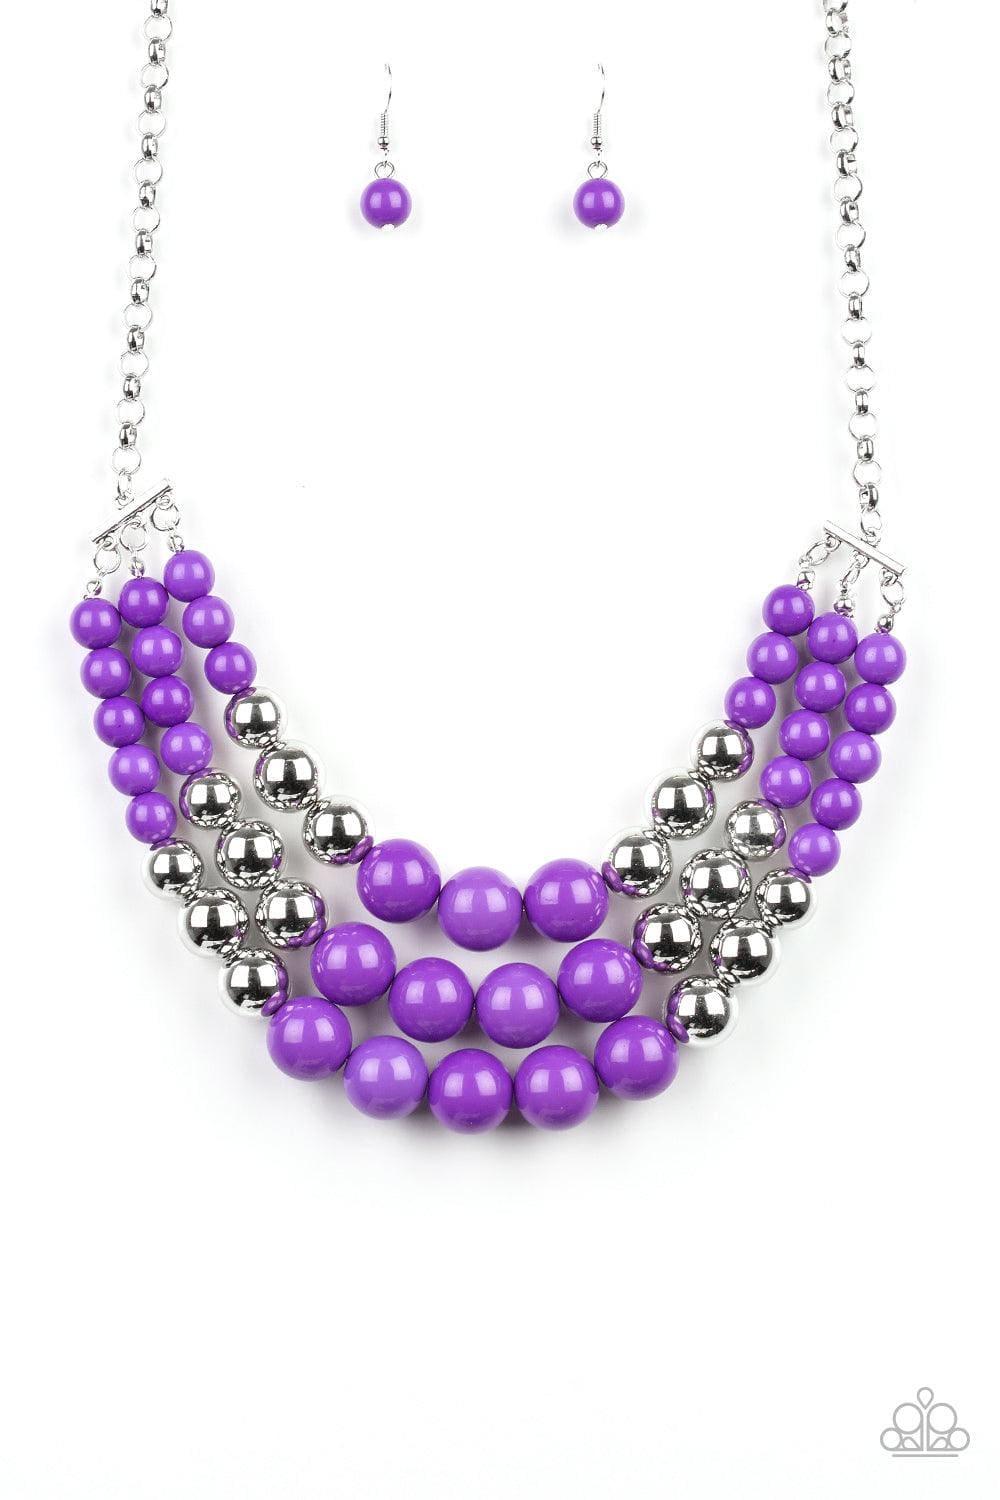 Paparazzi Accessories - Dream Pop - Purple Necklace - Bling by JessieK